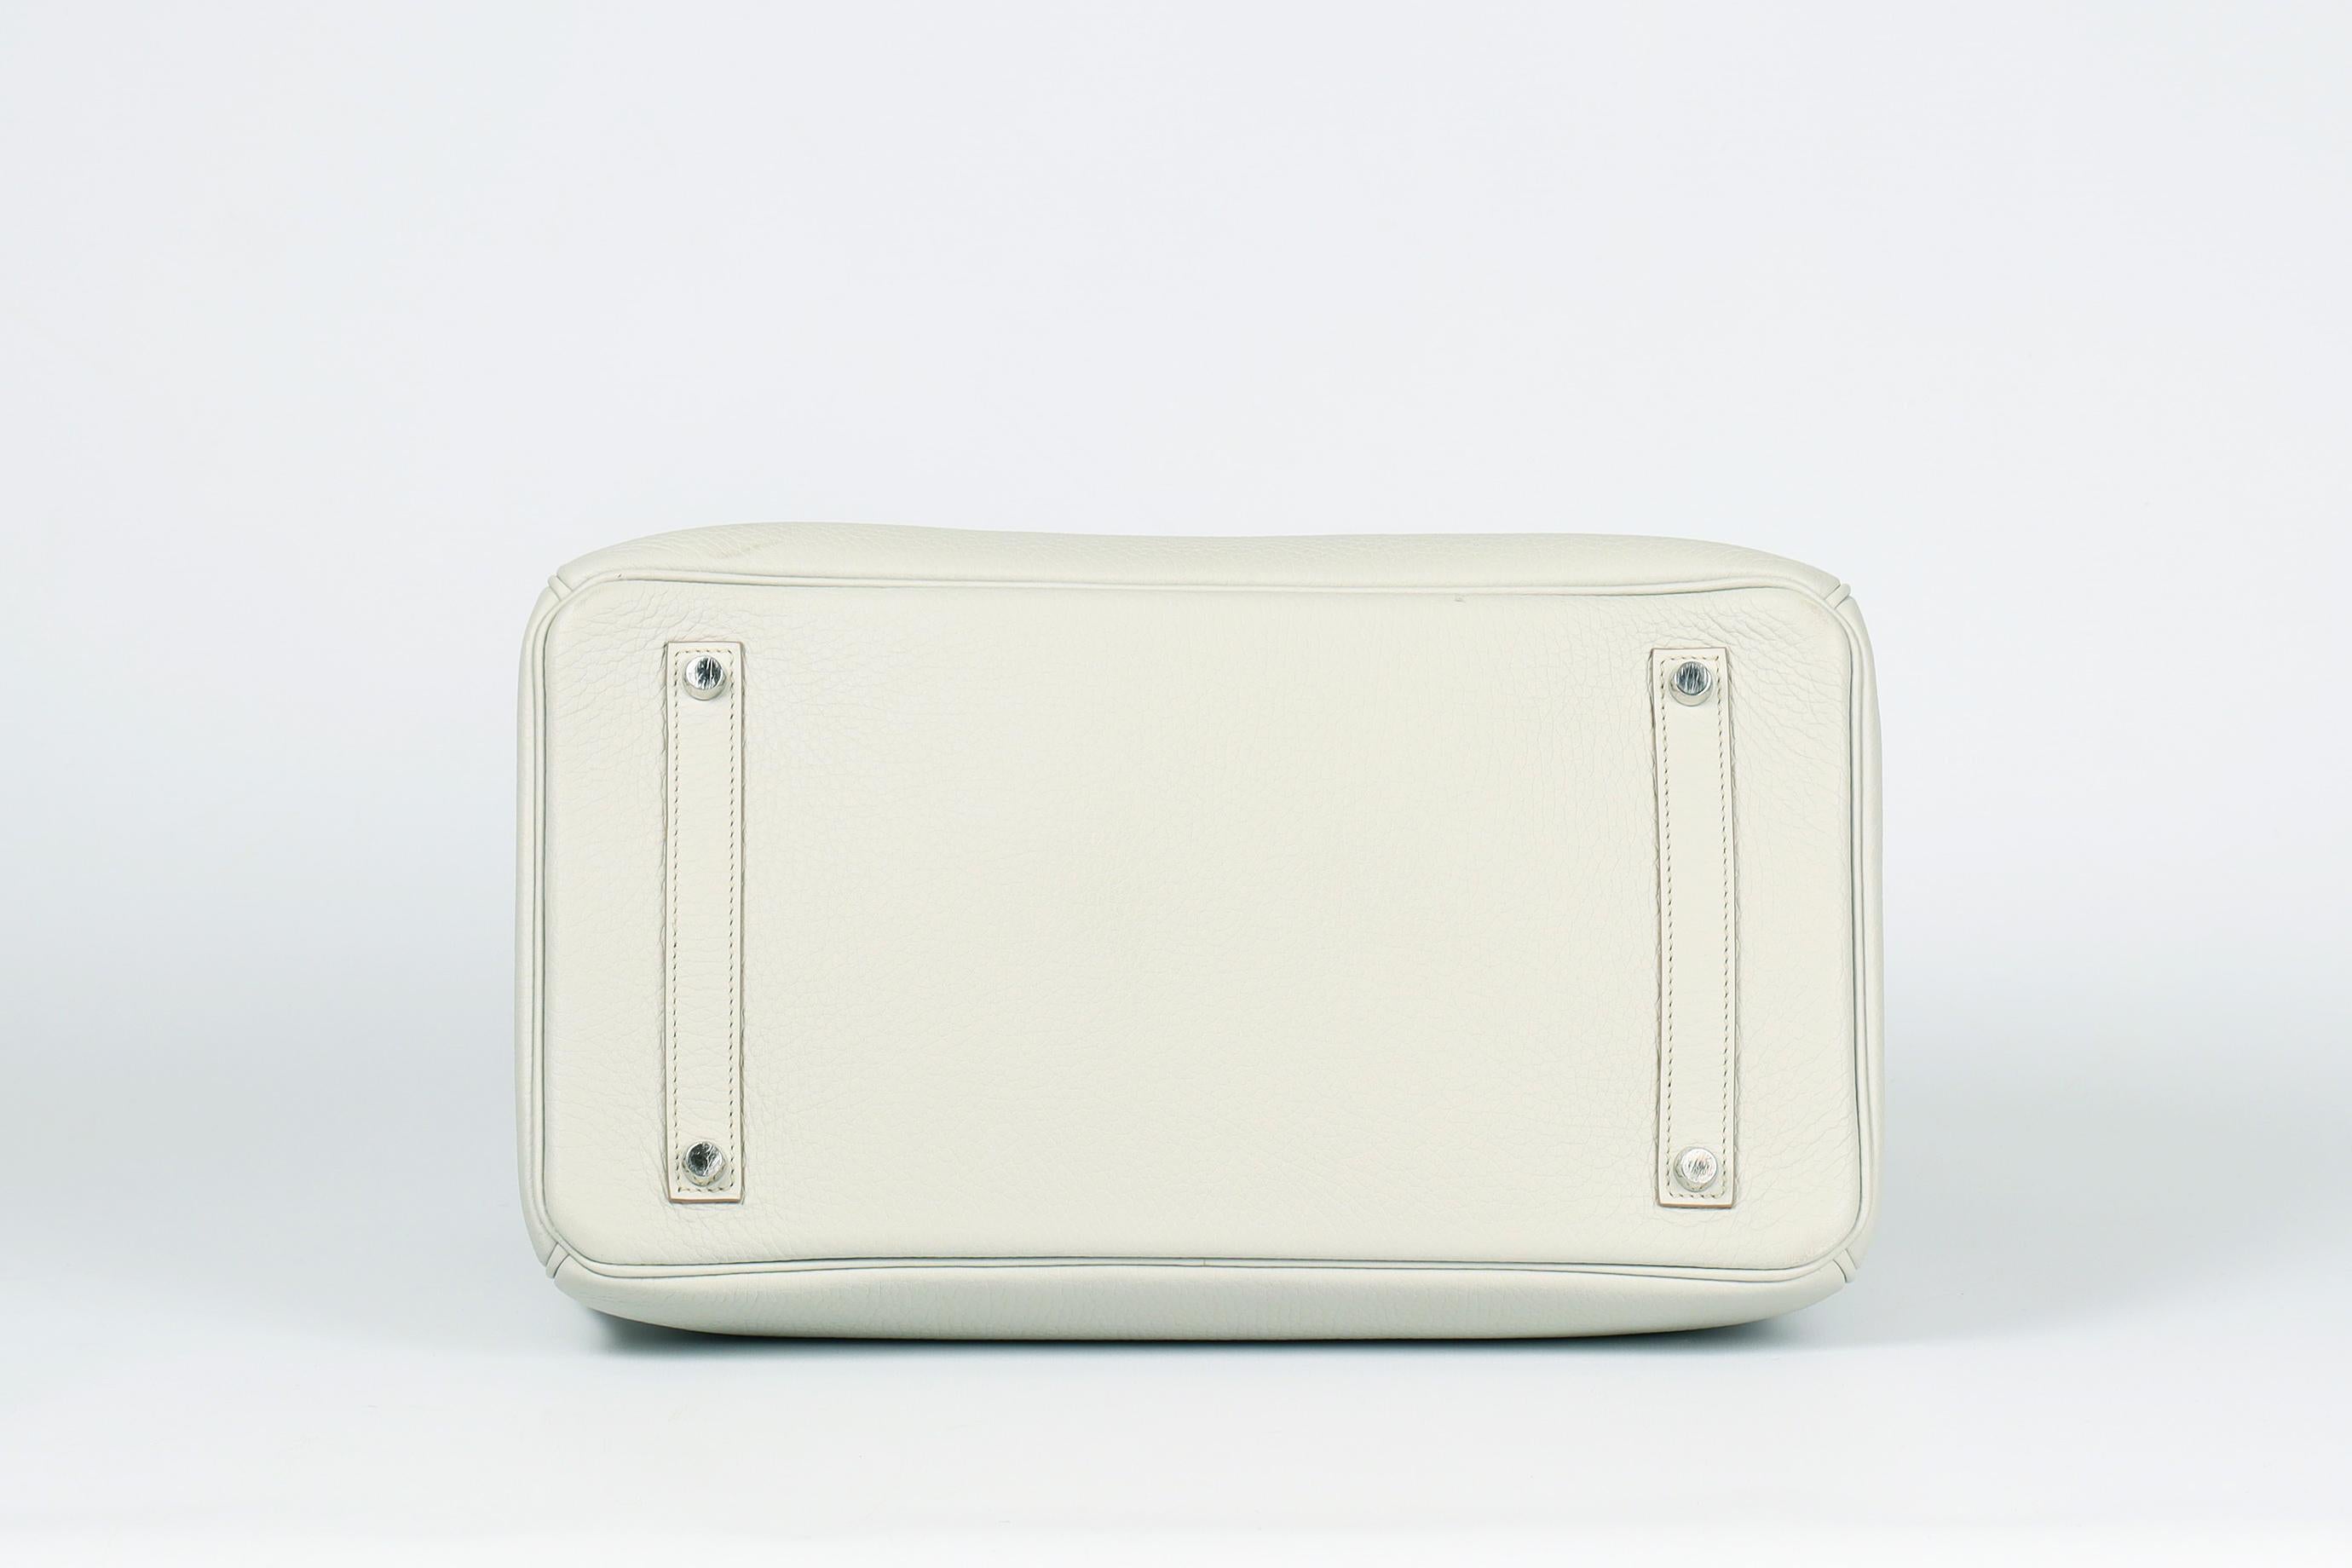 Hermès 2013 Birkin 35cm Togo Leather Bag For Sale 1